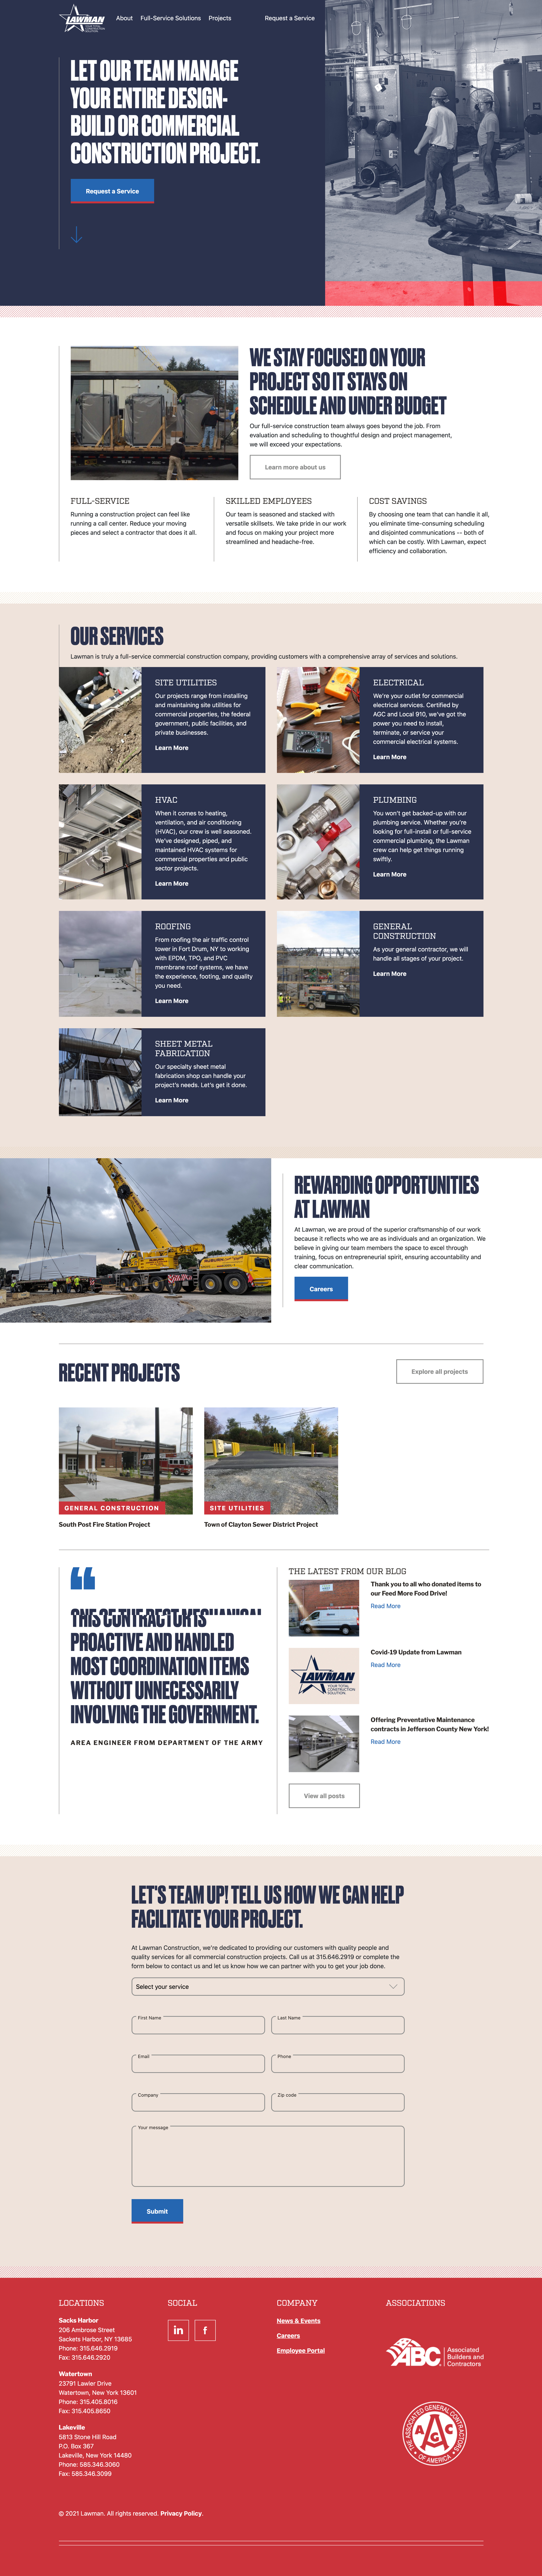 Website Design & Development for Lawman